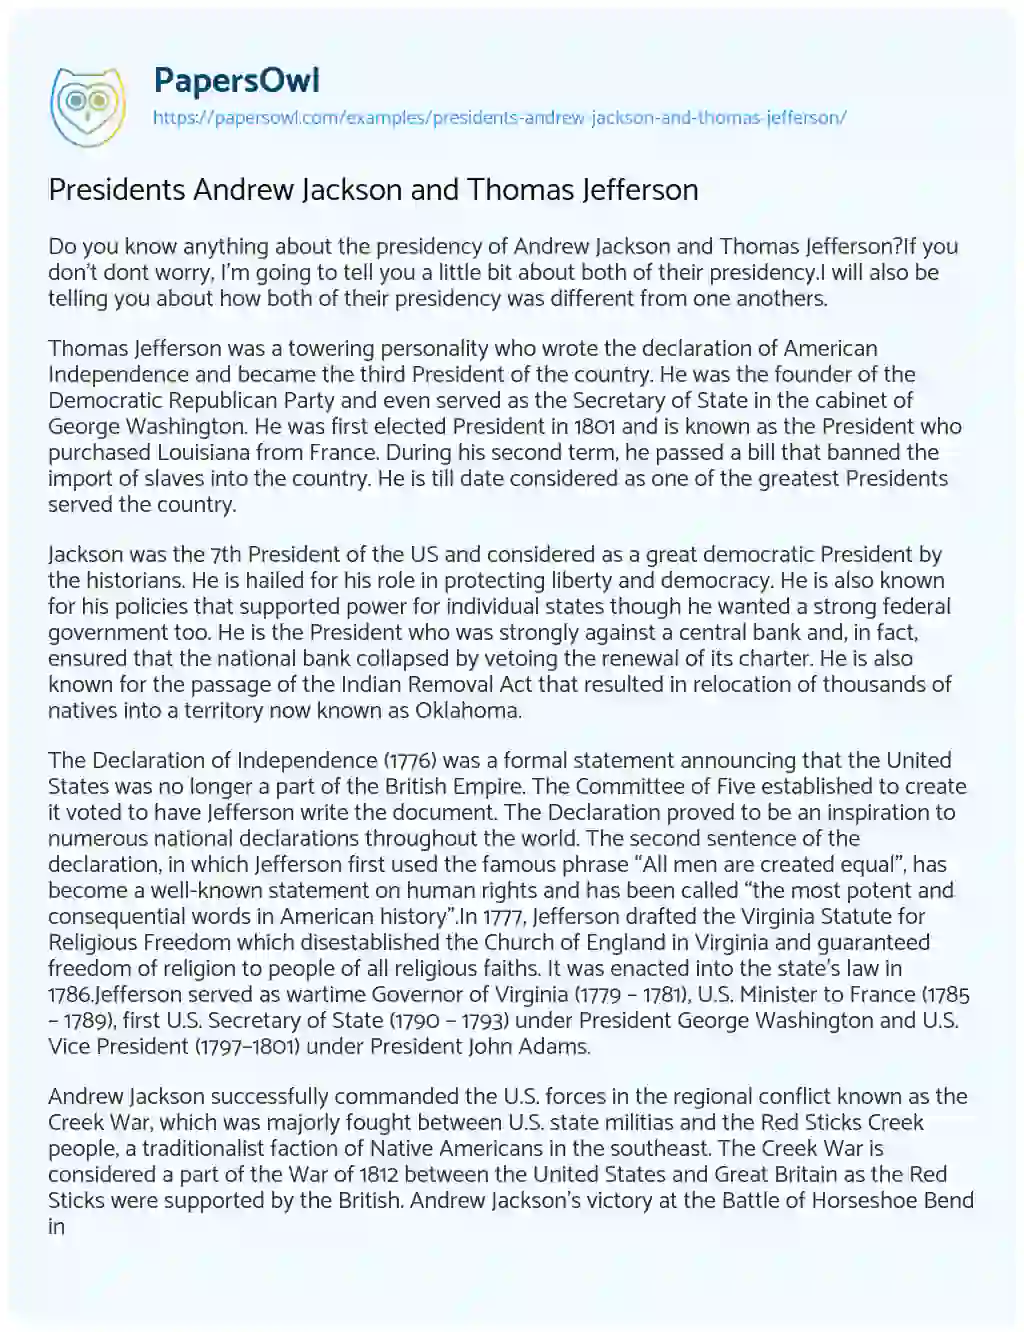 Essay on Presidents Andrew Jackson and Thomas Jefferson